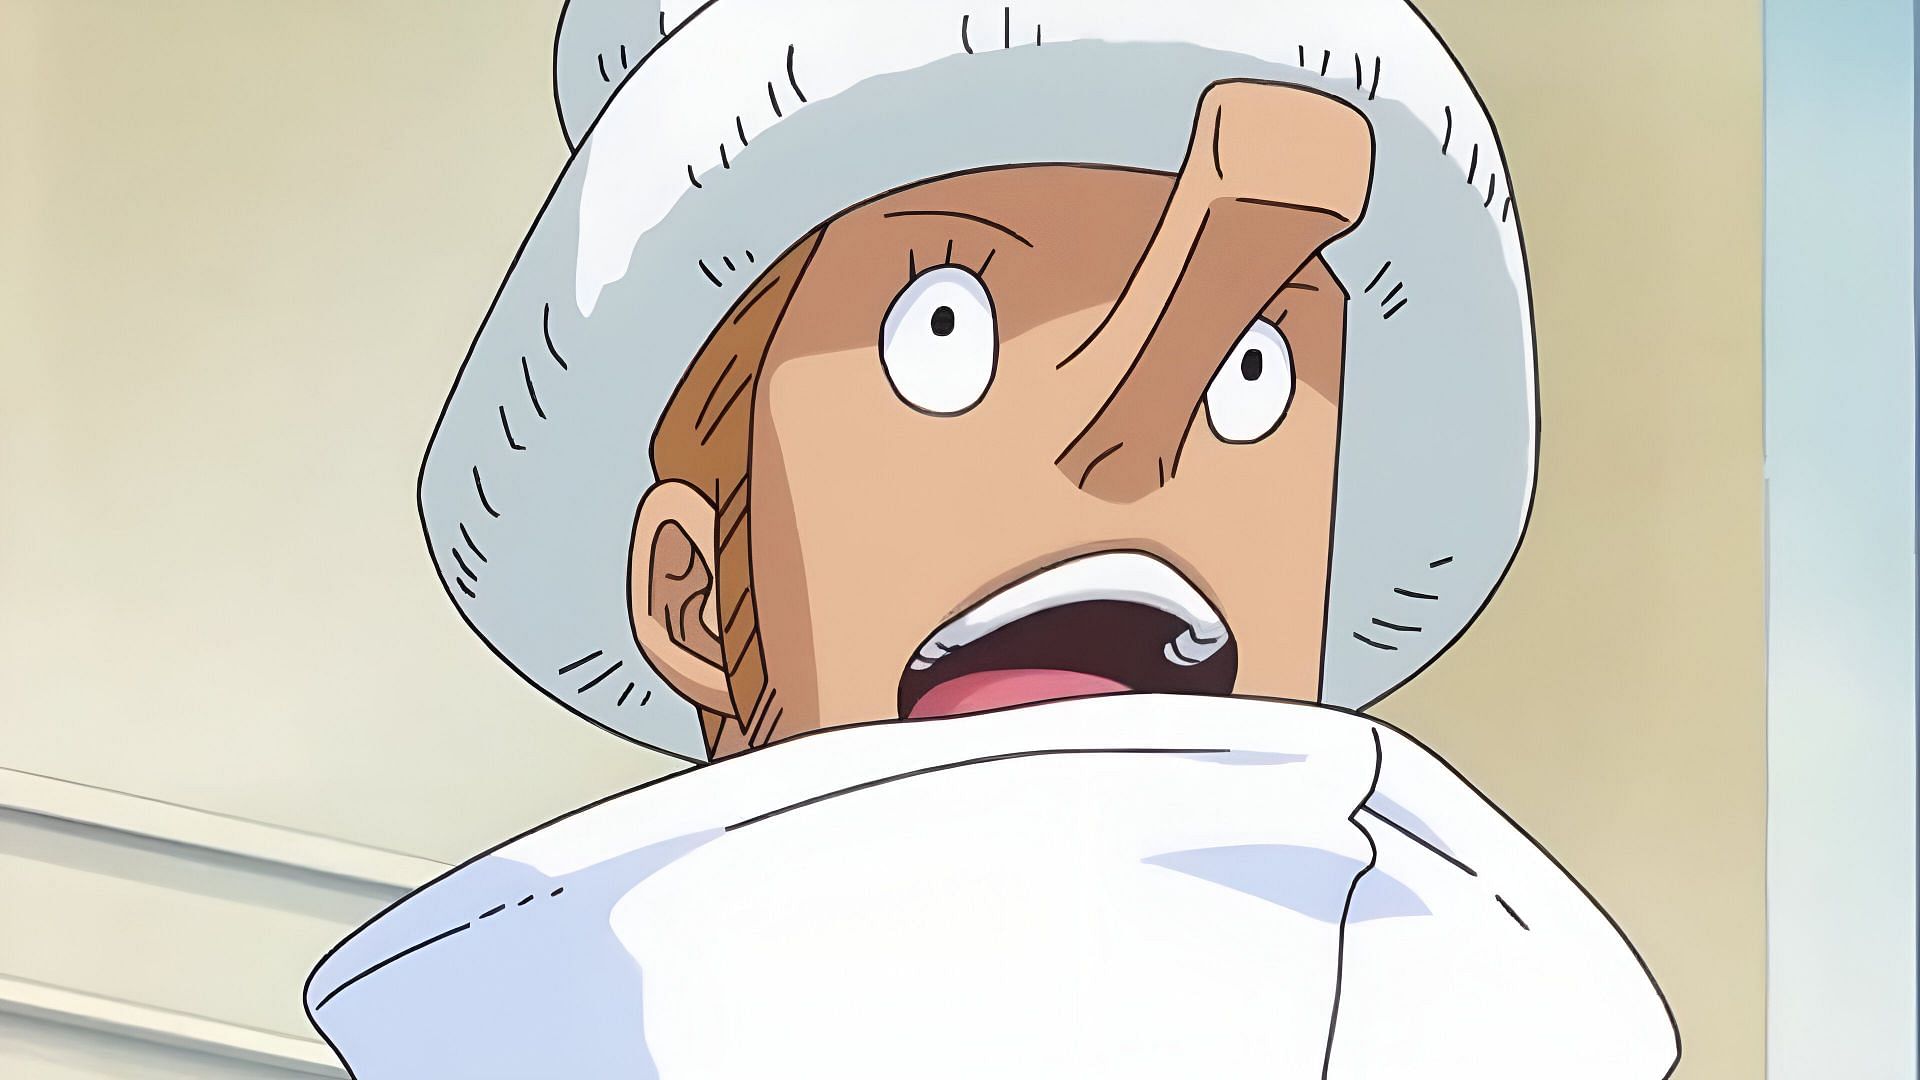 Kaku as seen in the anime (Image via Studio Pierrot)